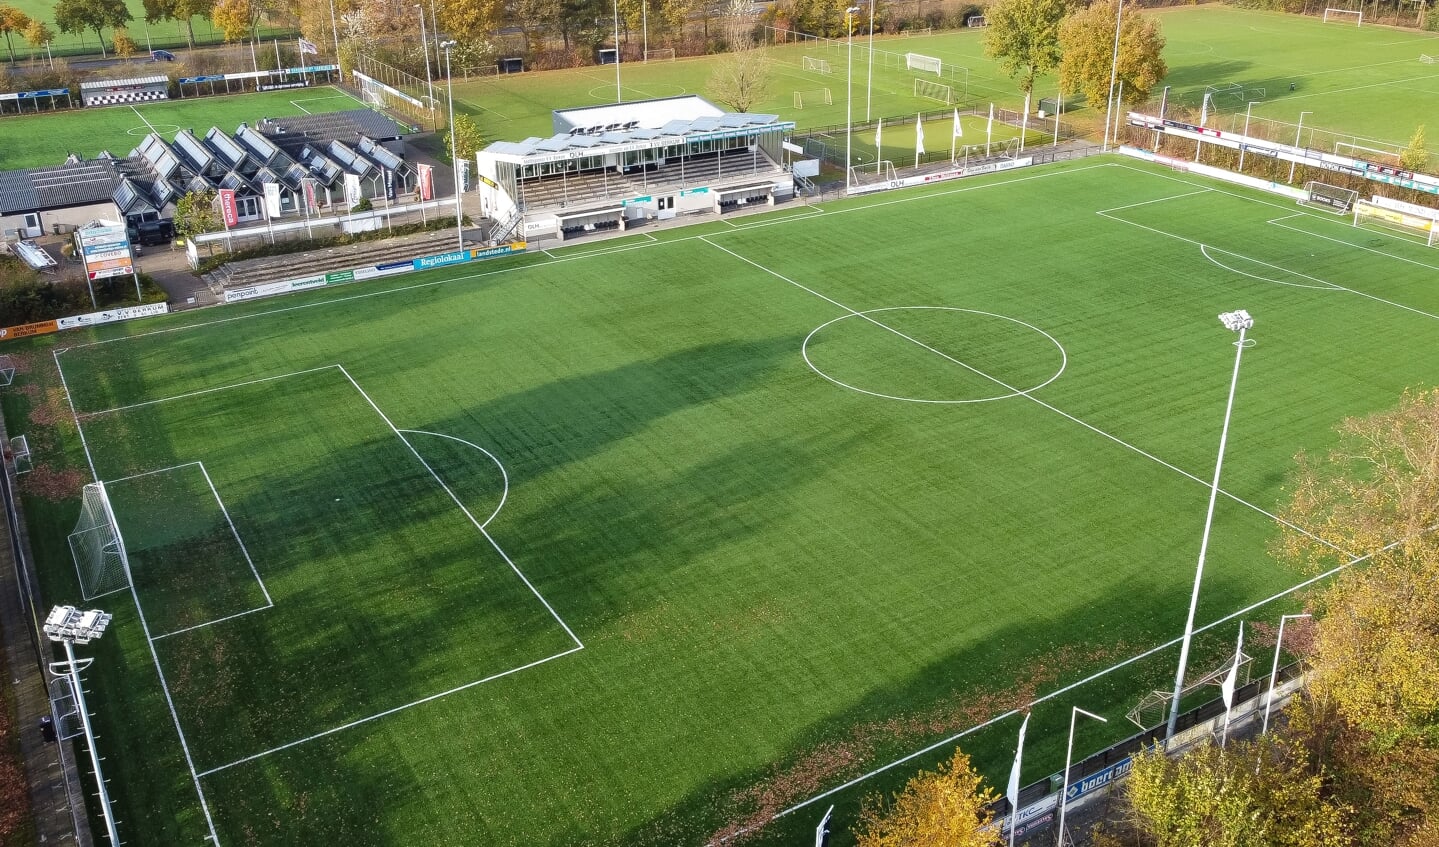 Sportpark de Vegtlust van voetbalvereniging Berkum.